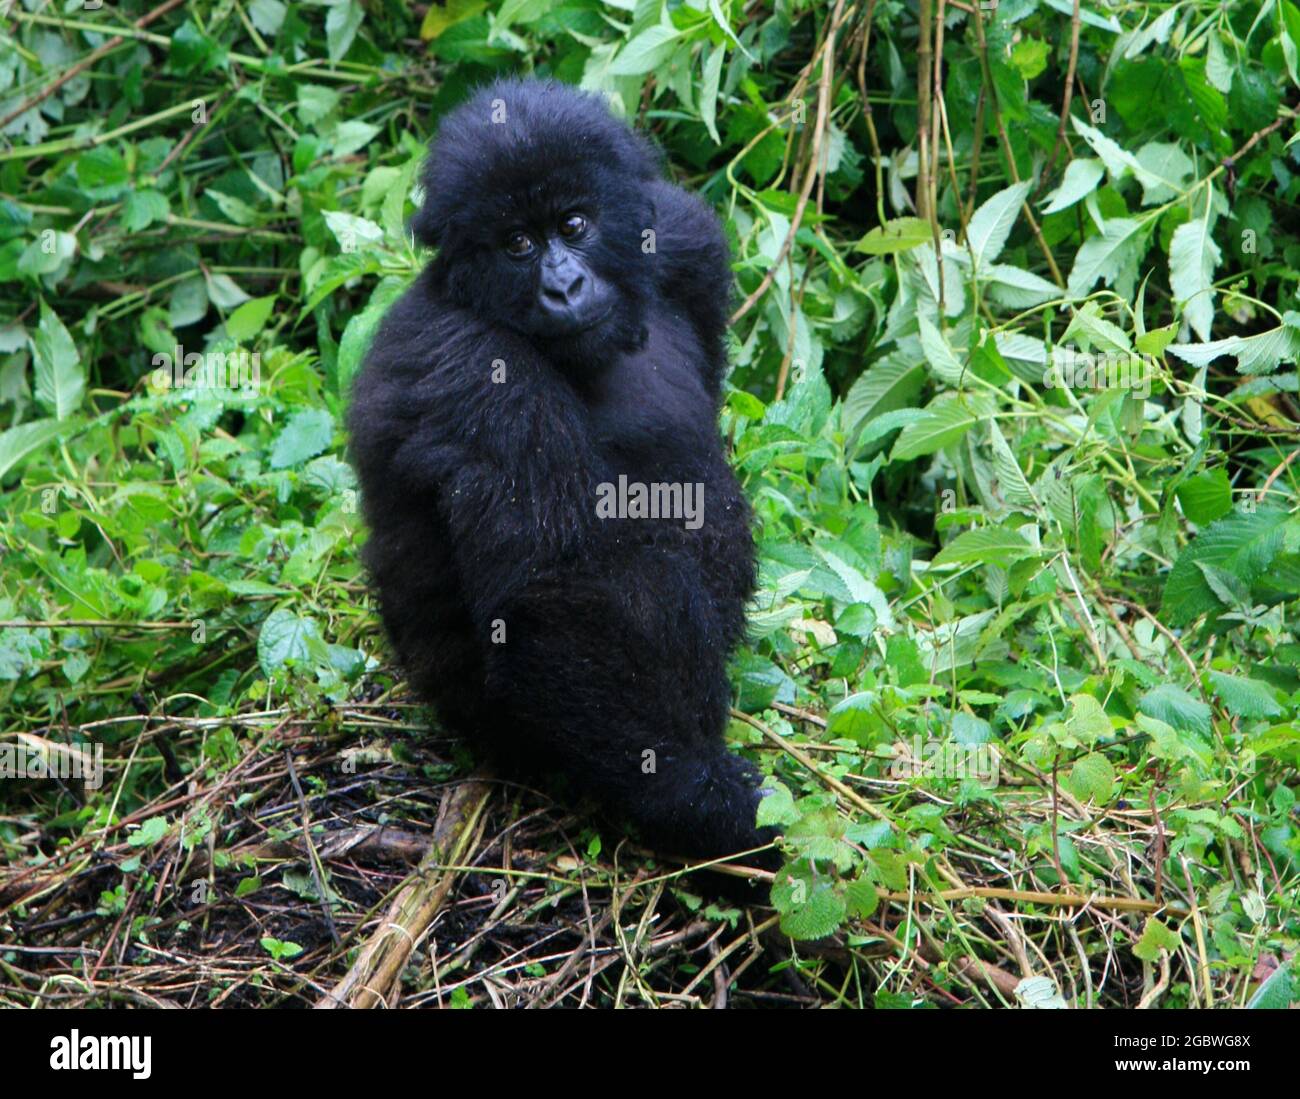 Closeup portrait of endangered baby Mountain Gorilla (Gorilla beringei beringei) looking directly at camera Volcanoes National Park, Rwanda. Stock Photo